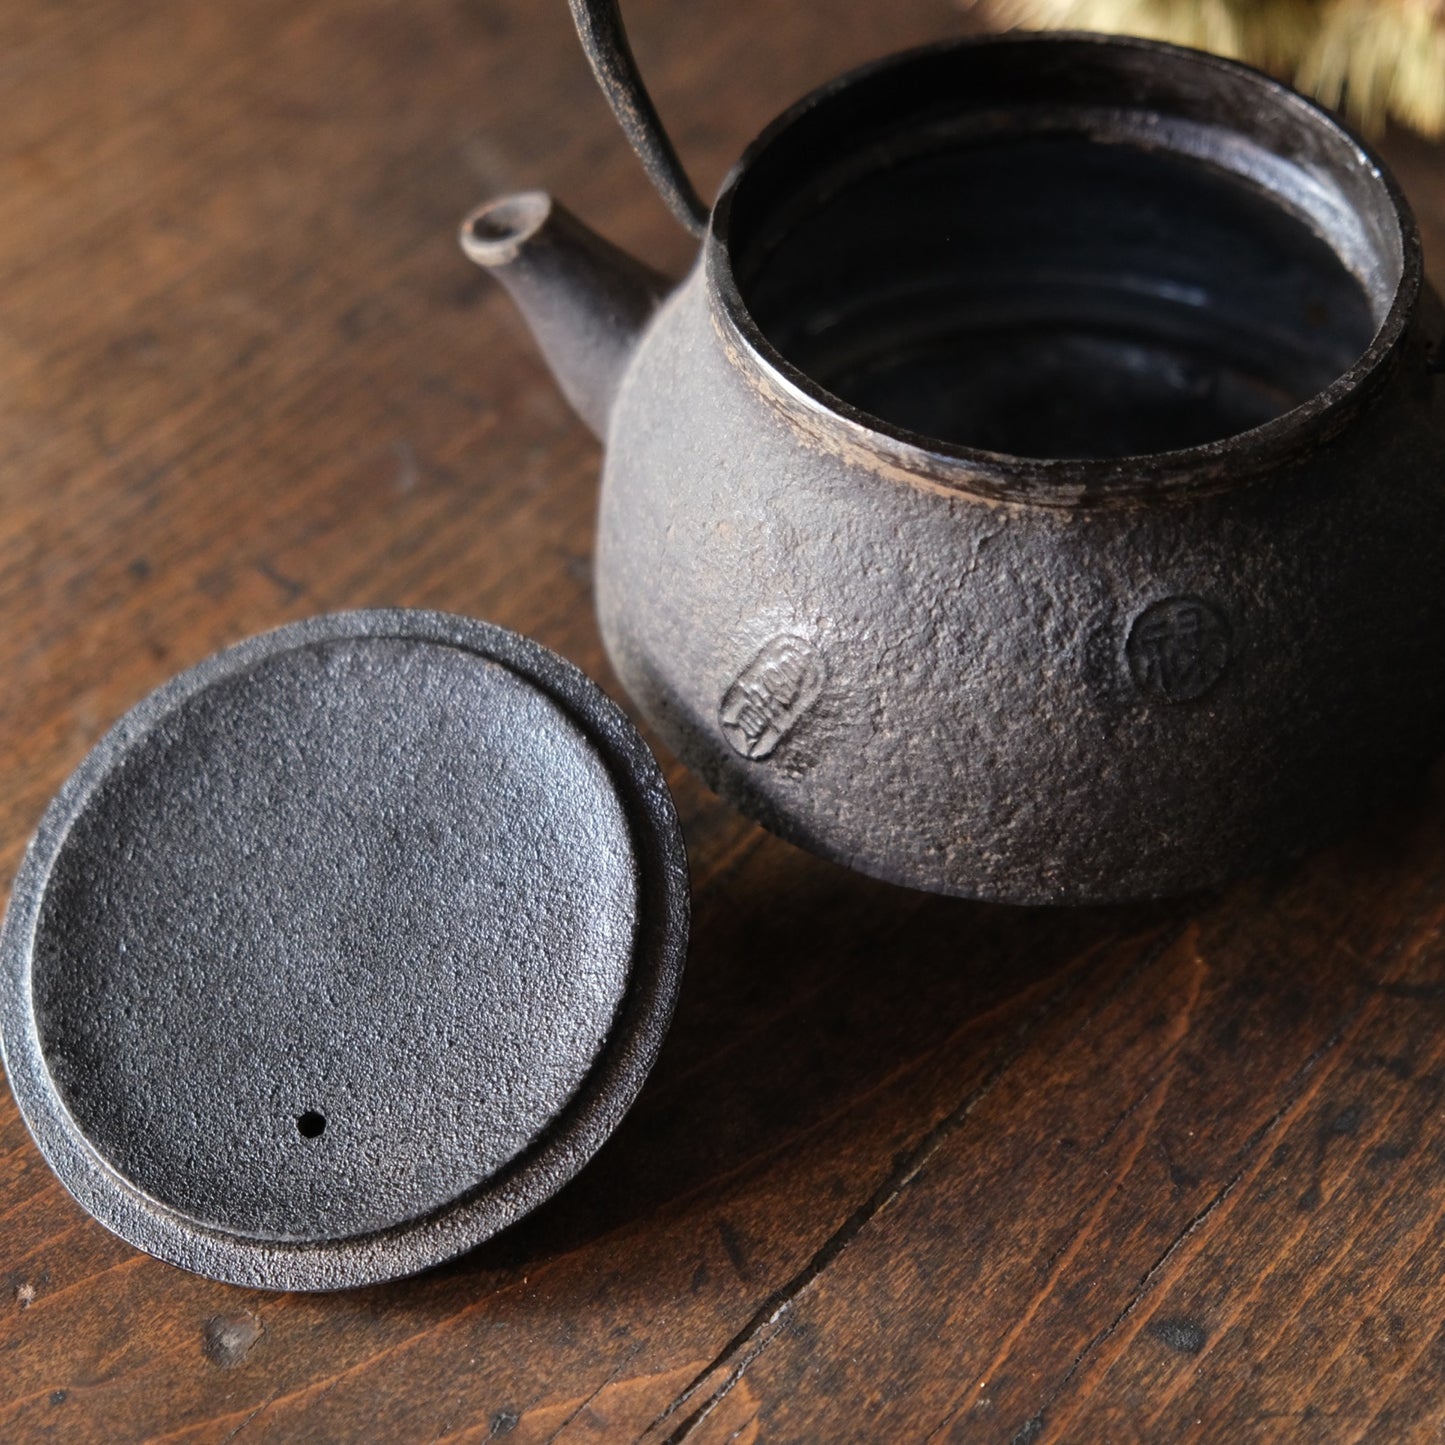 Vintage Japanese Tetsubin iron kettle small size (kotobuki)